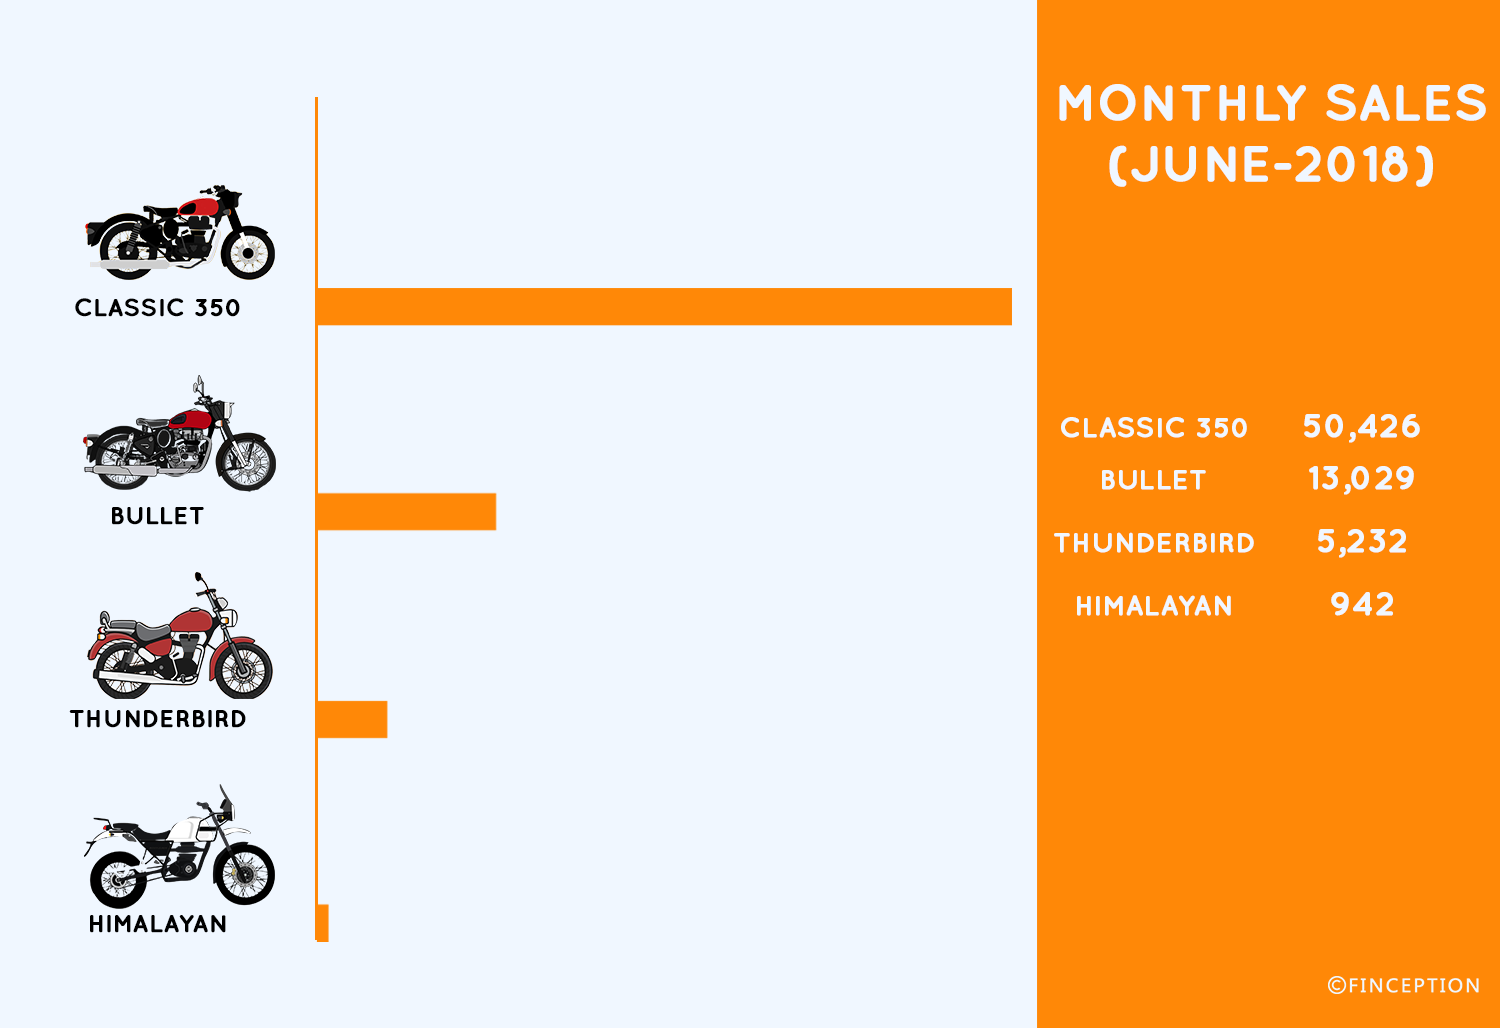 Eicher Bike sales in June 2018